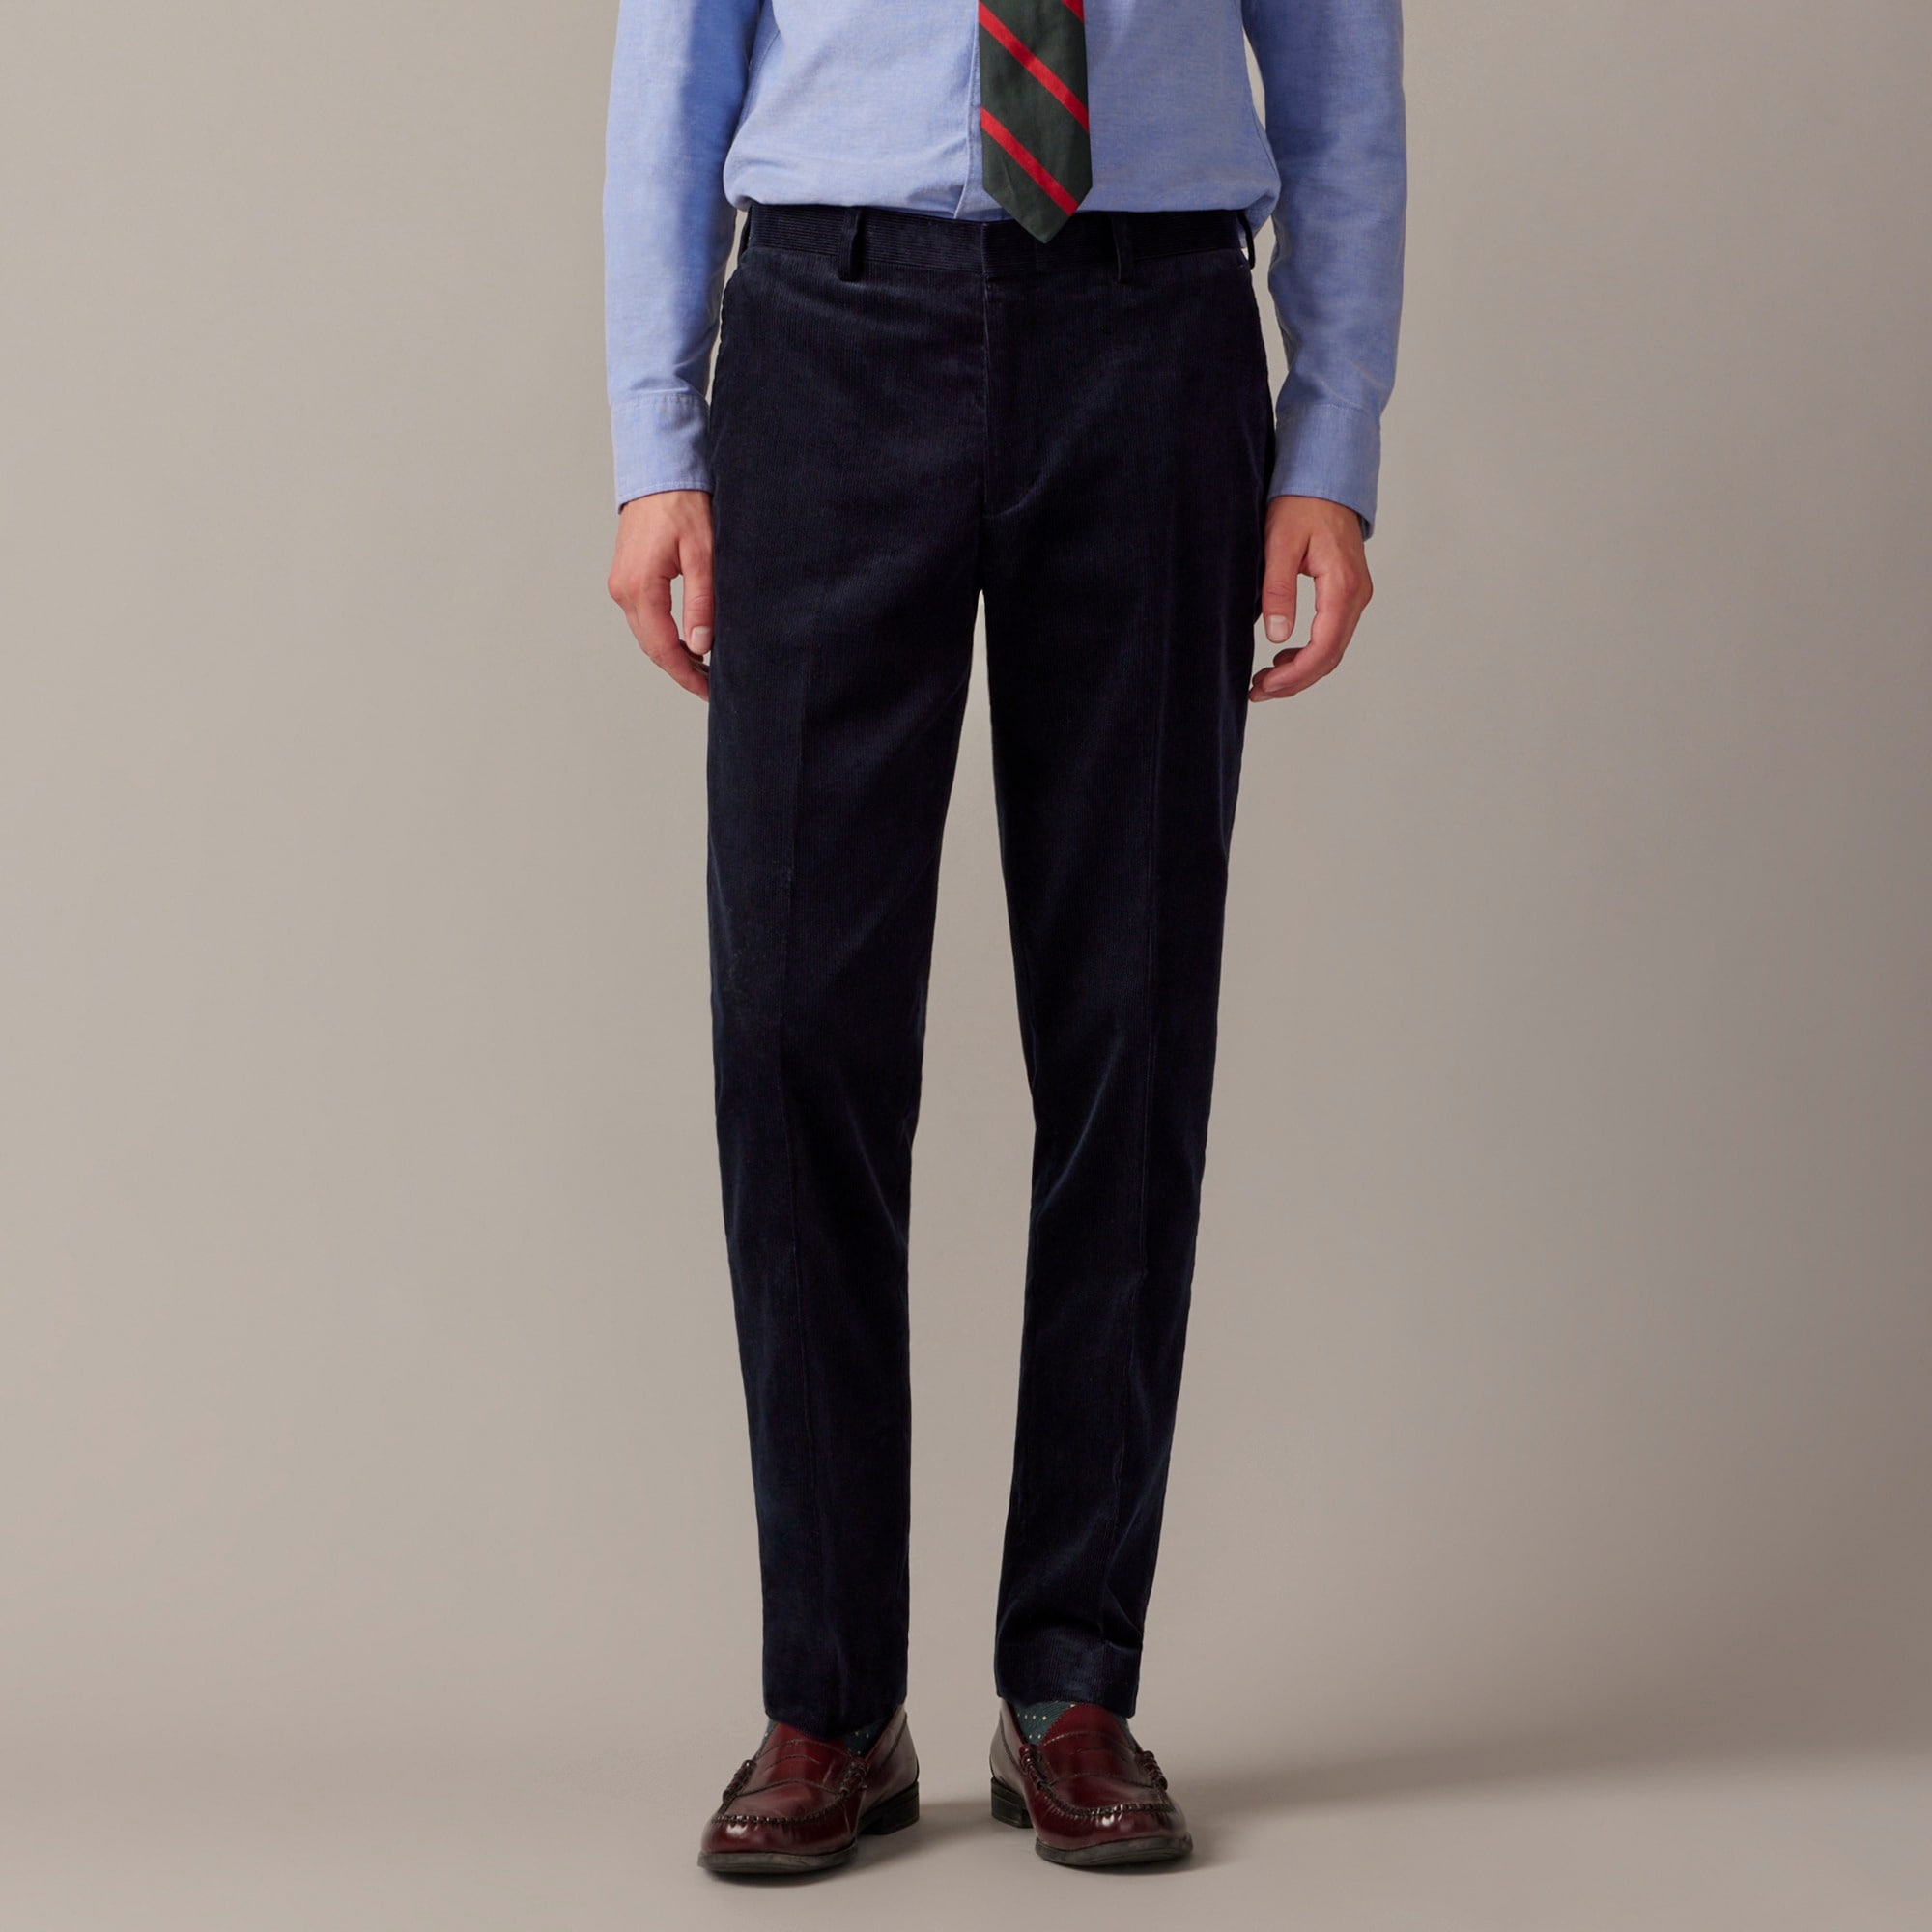 Jcrew Ludlow Slim-fit suit pant in Italian cotton corduroy